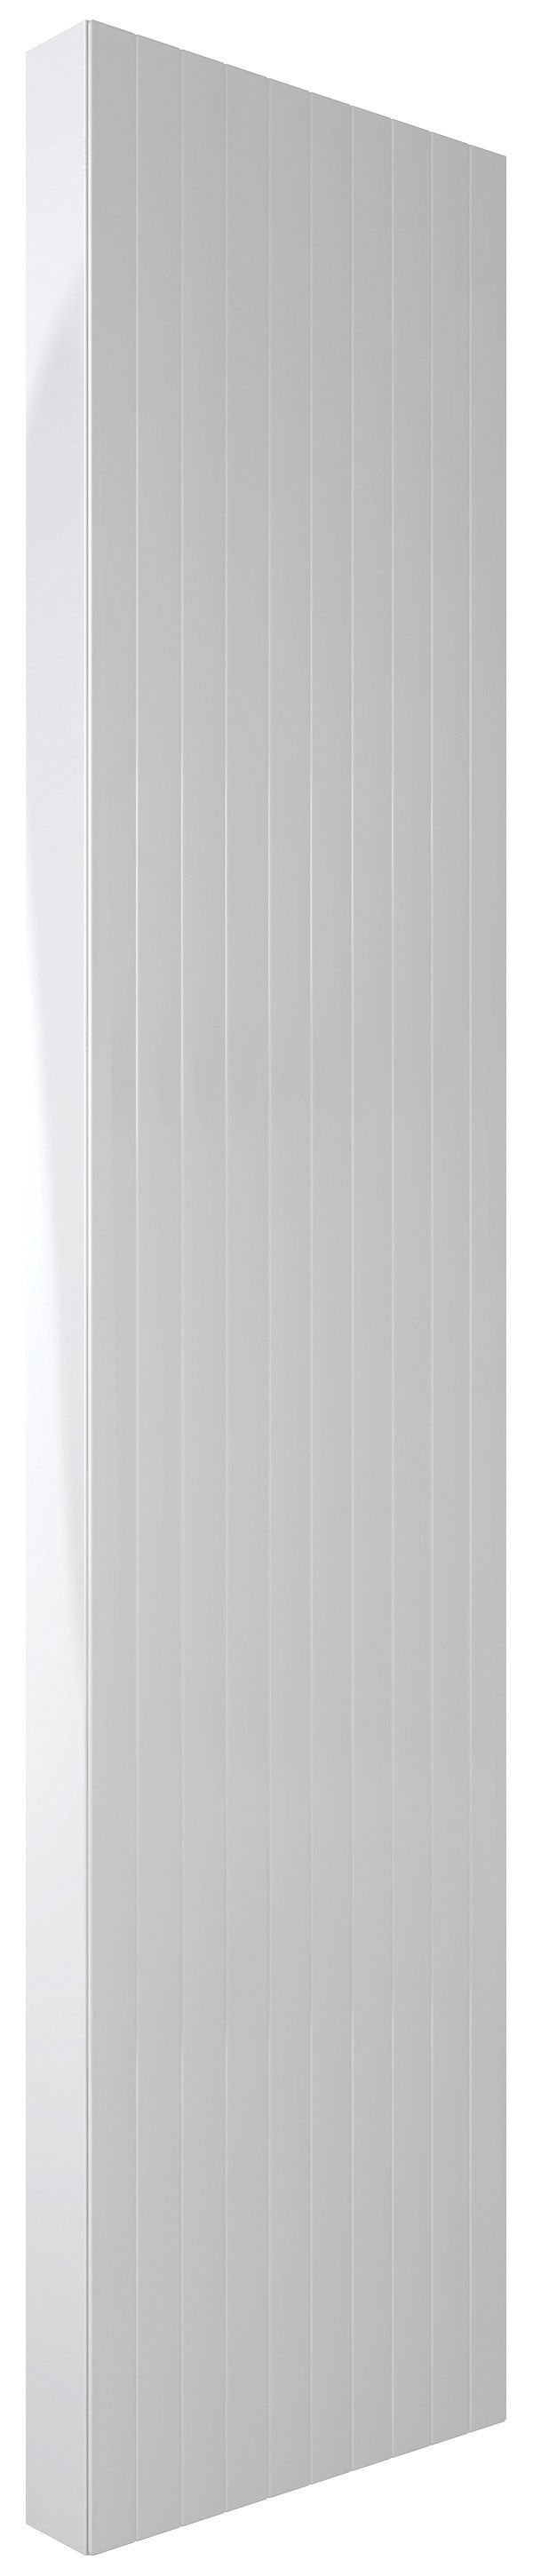 Image of Henrad Alto Double Convector Vertical Designer Radiator - White 1800 x 500 mm